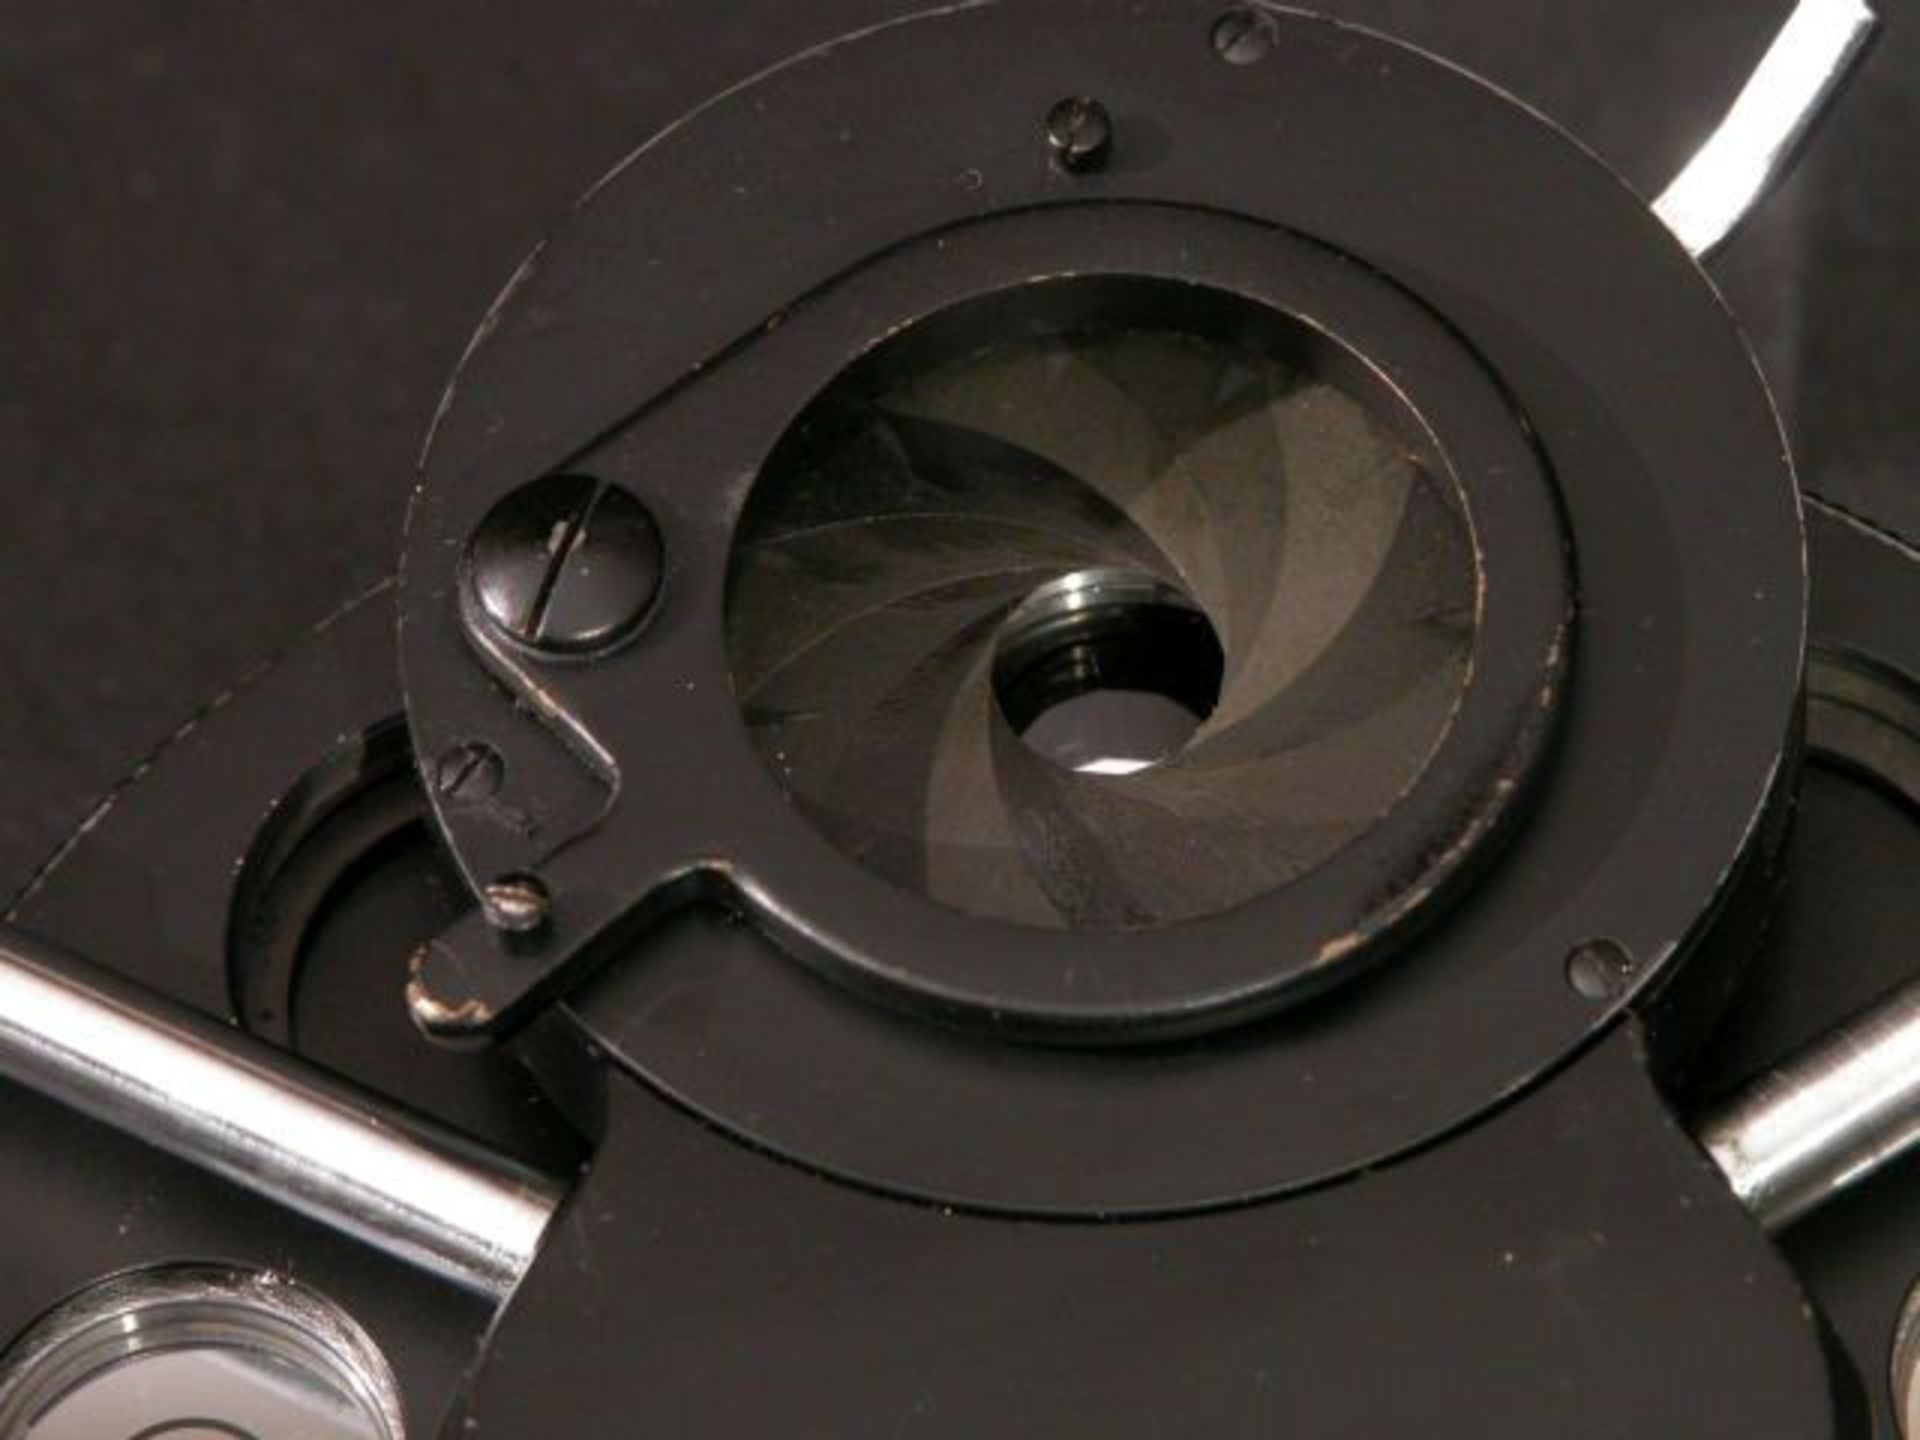 Reichert Austria MICROSCOPE Nr. 14 098 Condenser W/ Iris Dovetail 4 Lenses, Qty 1, 330795621392 - Image 5 of 6